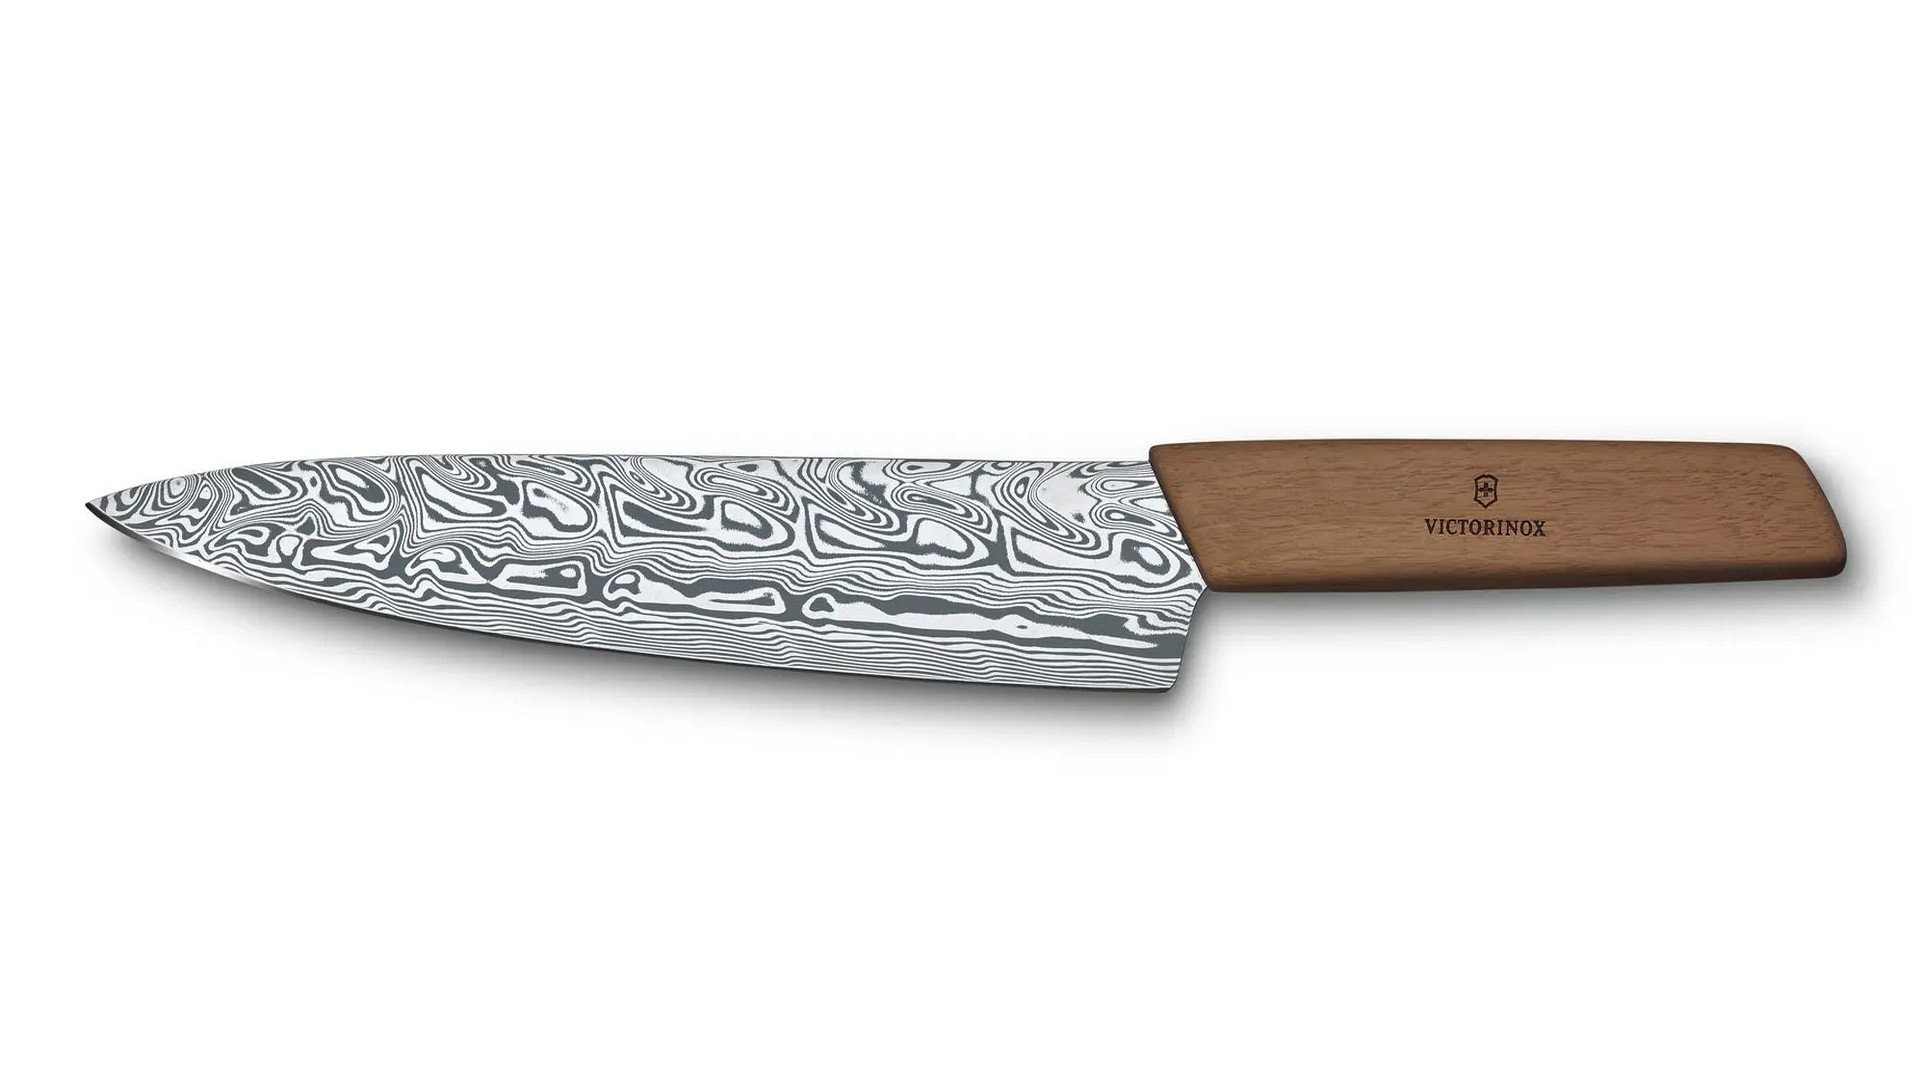 Cuchillo para chef Swiss Modern